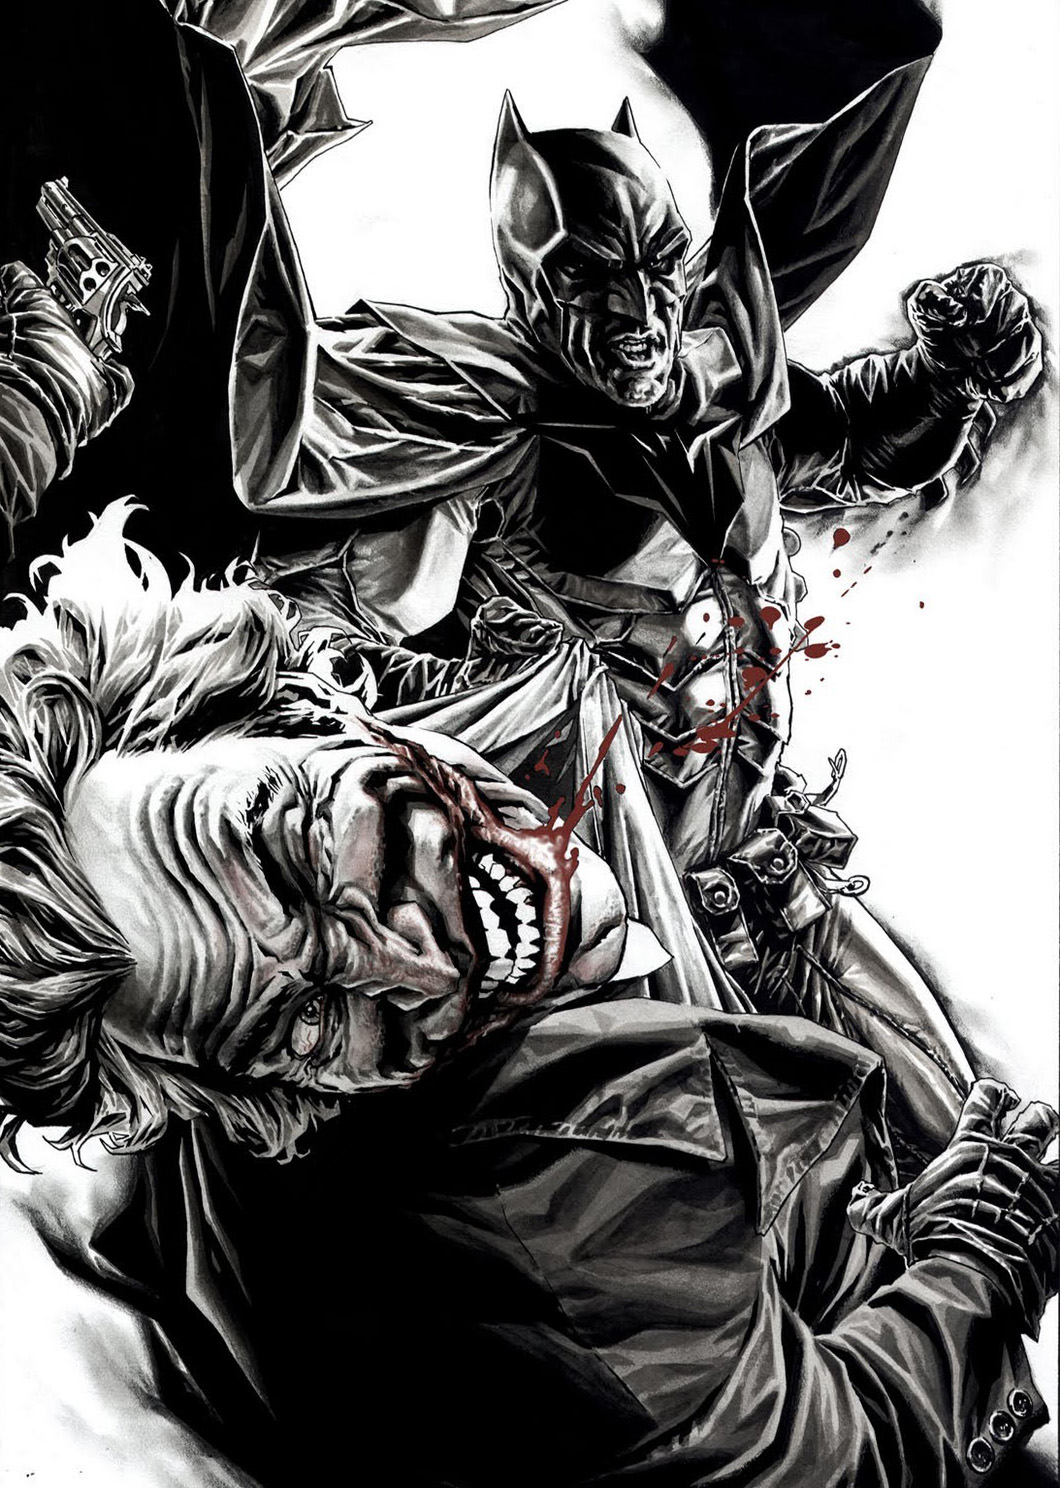 dc comics wallpaper hd,batman,erfundener charakter,superheld,superschurke,illustration